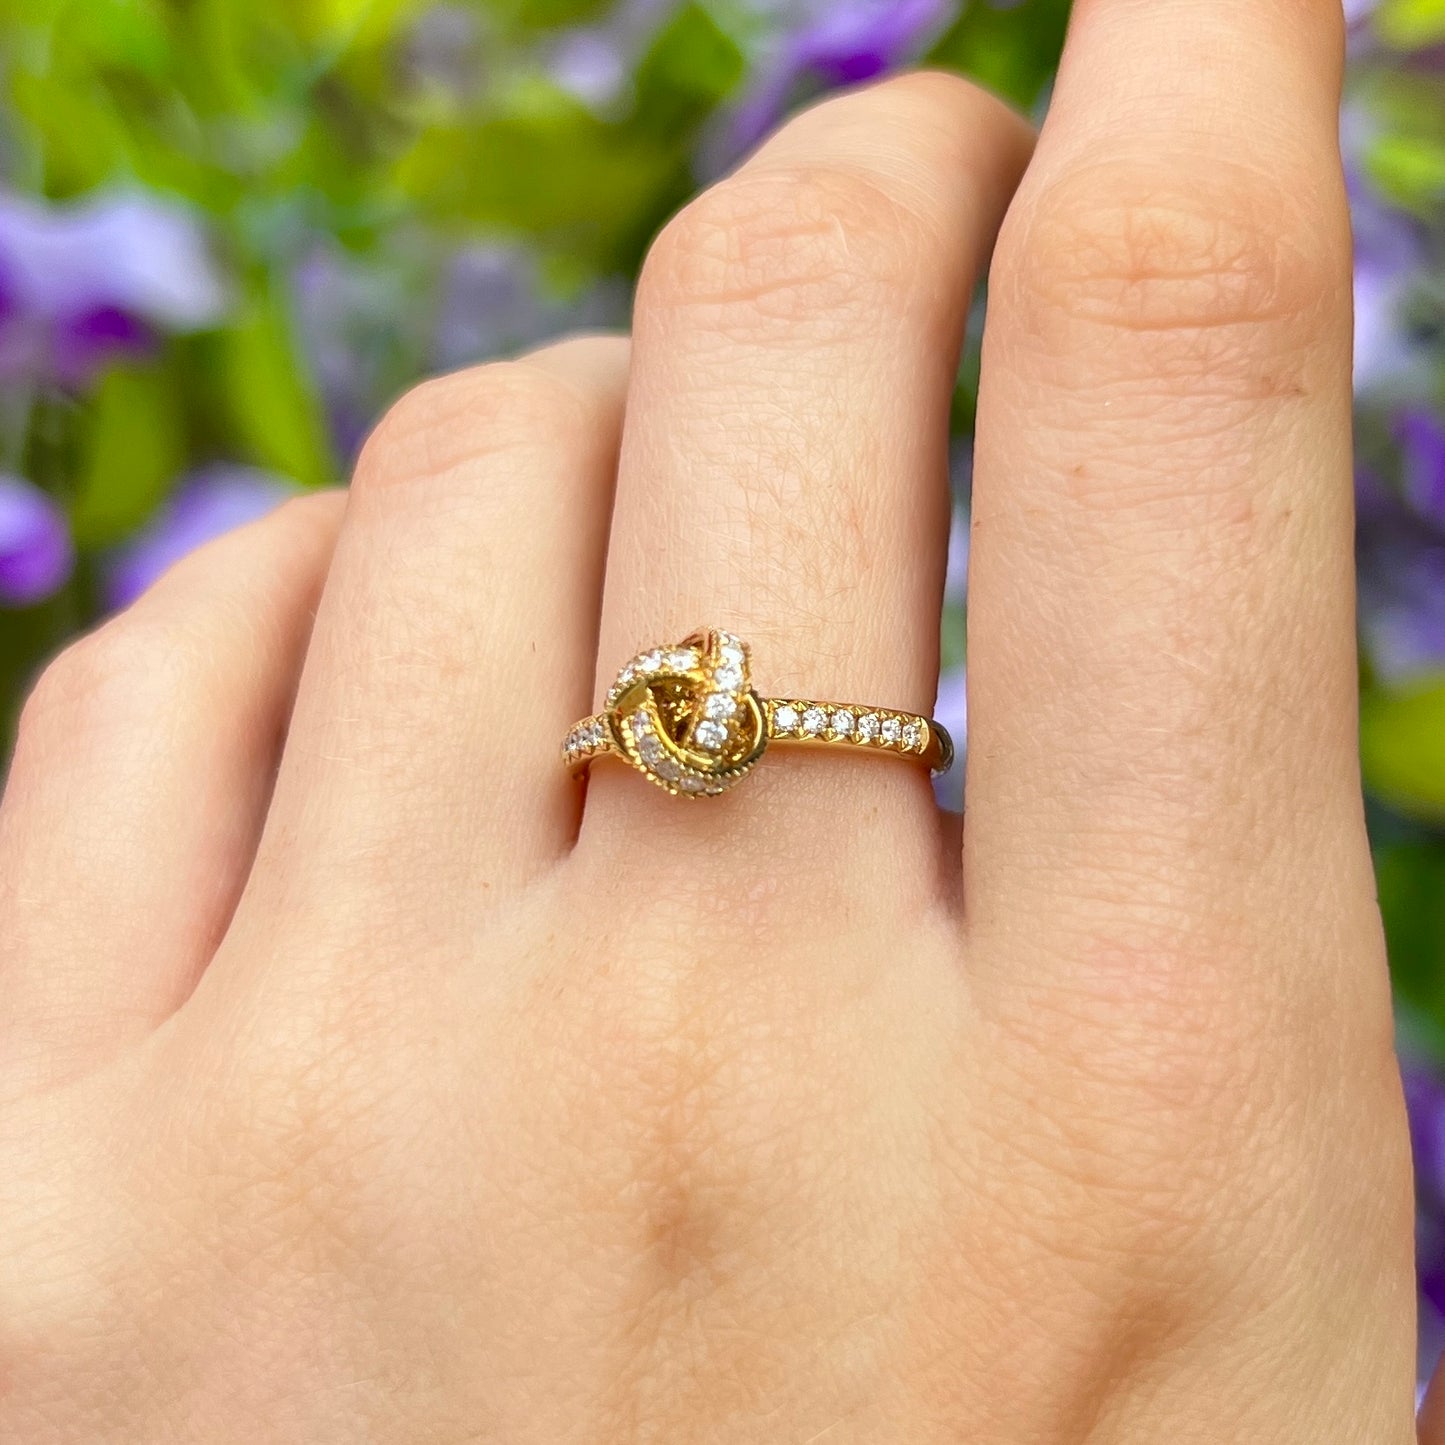 18ct Yellow Gold Diamond Knot Ring - Size M